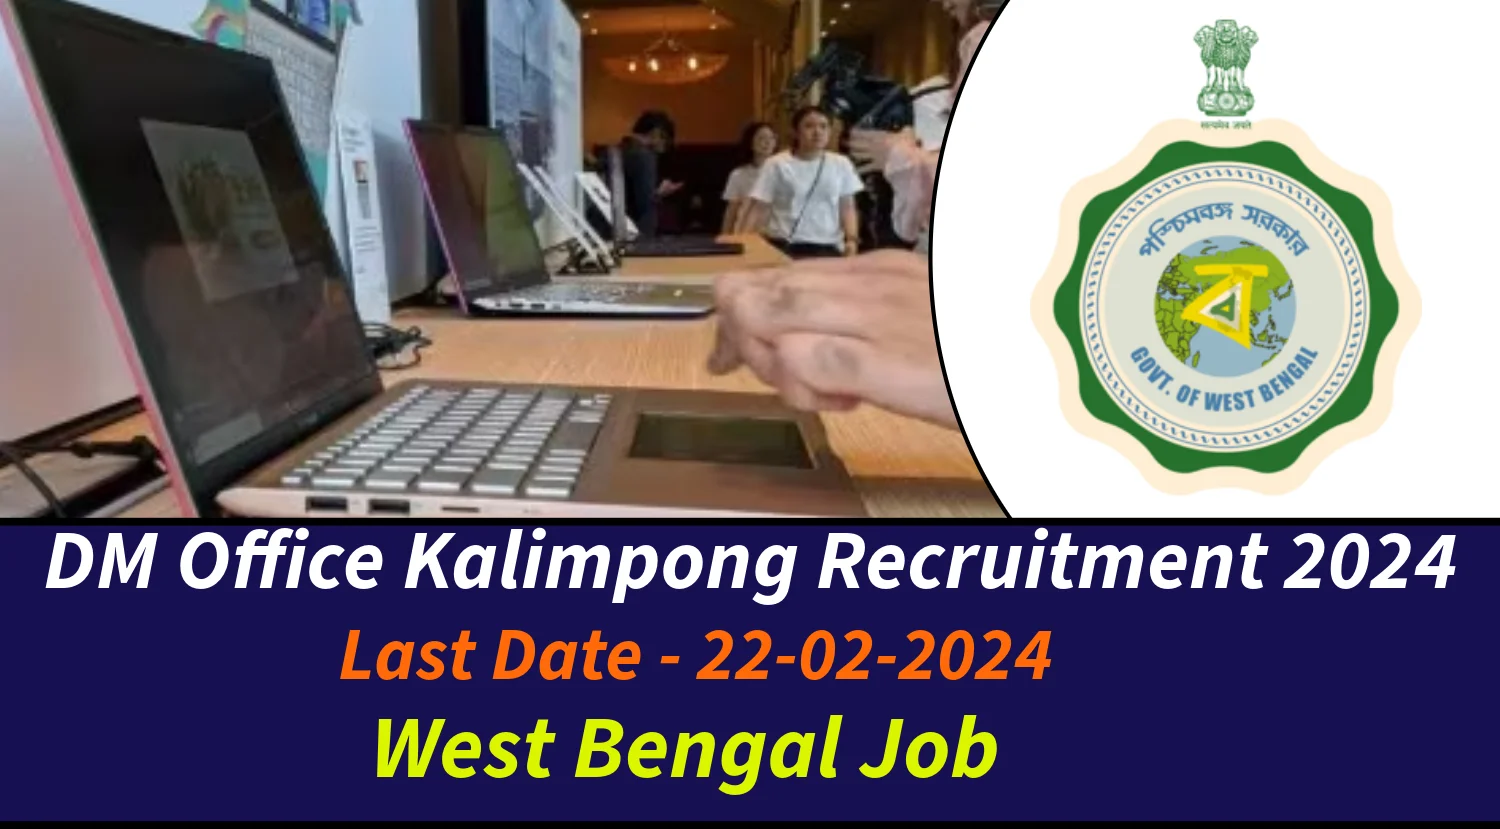 DM Office Kalimpong Group C Recruitment 2024